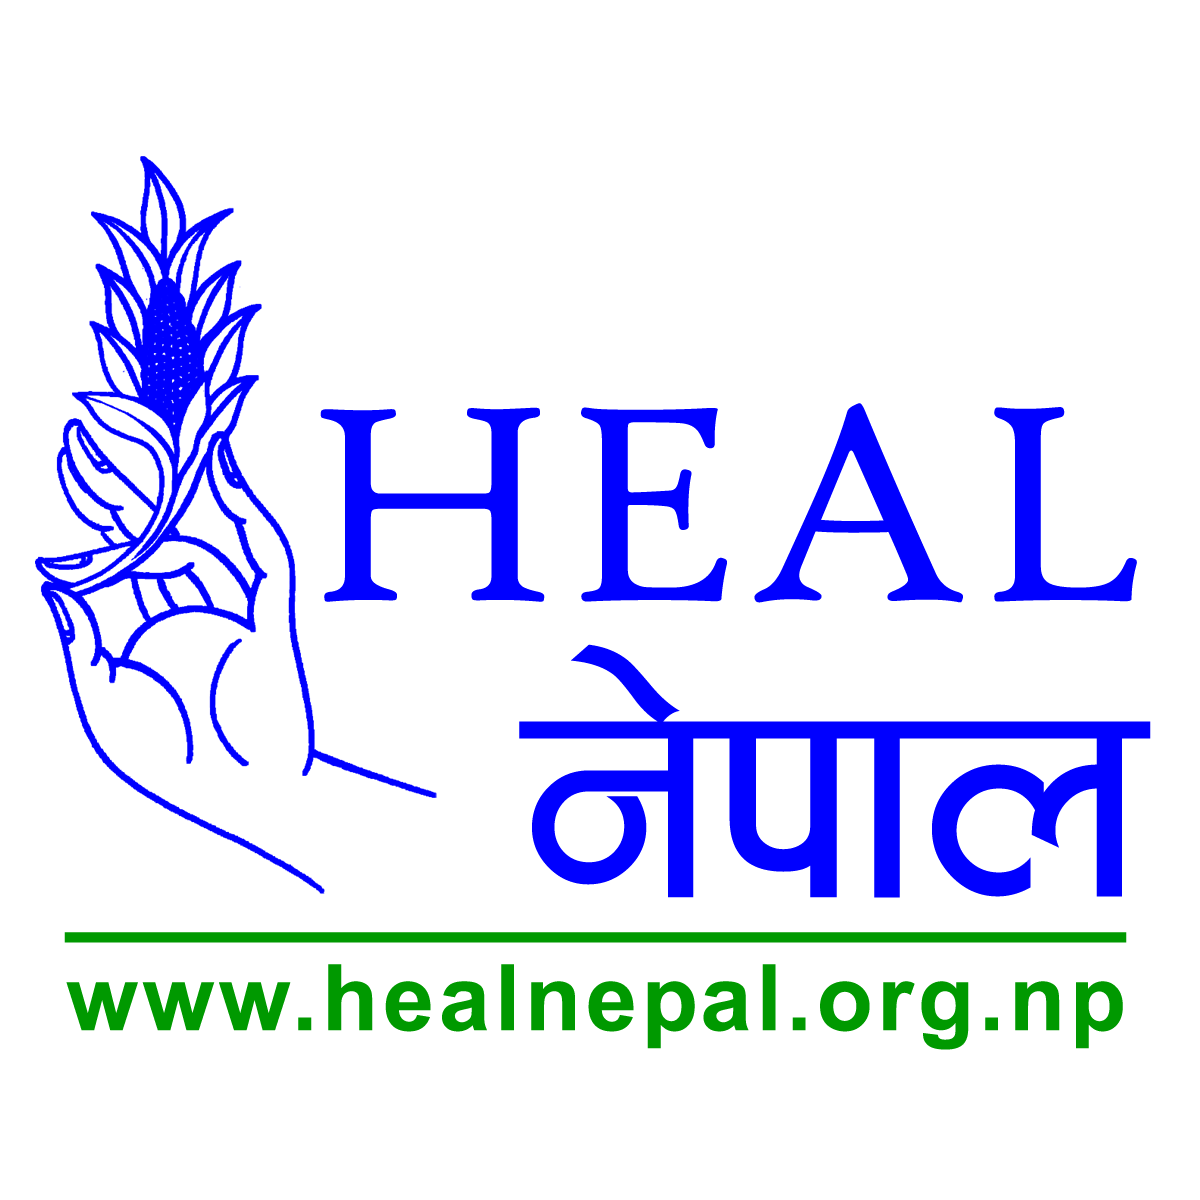 image of Heal Nepal